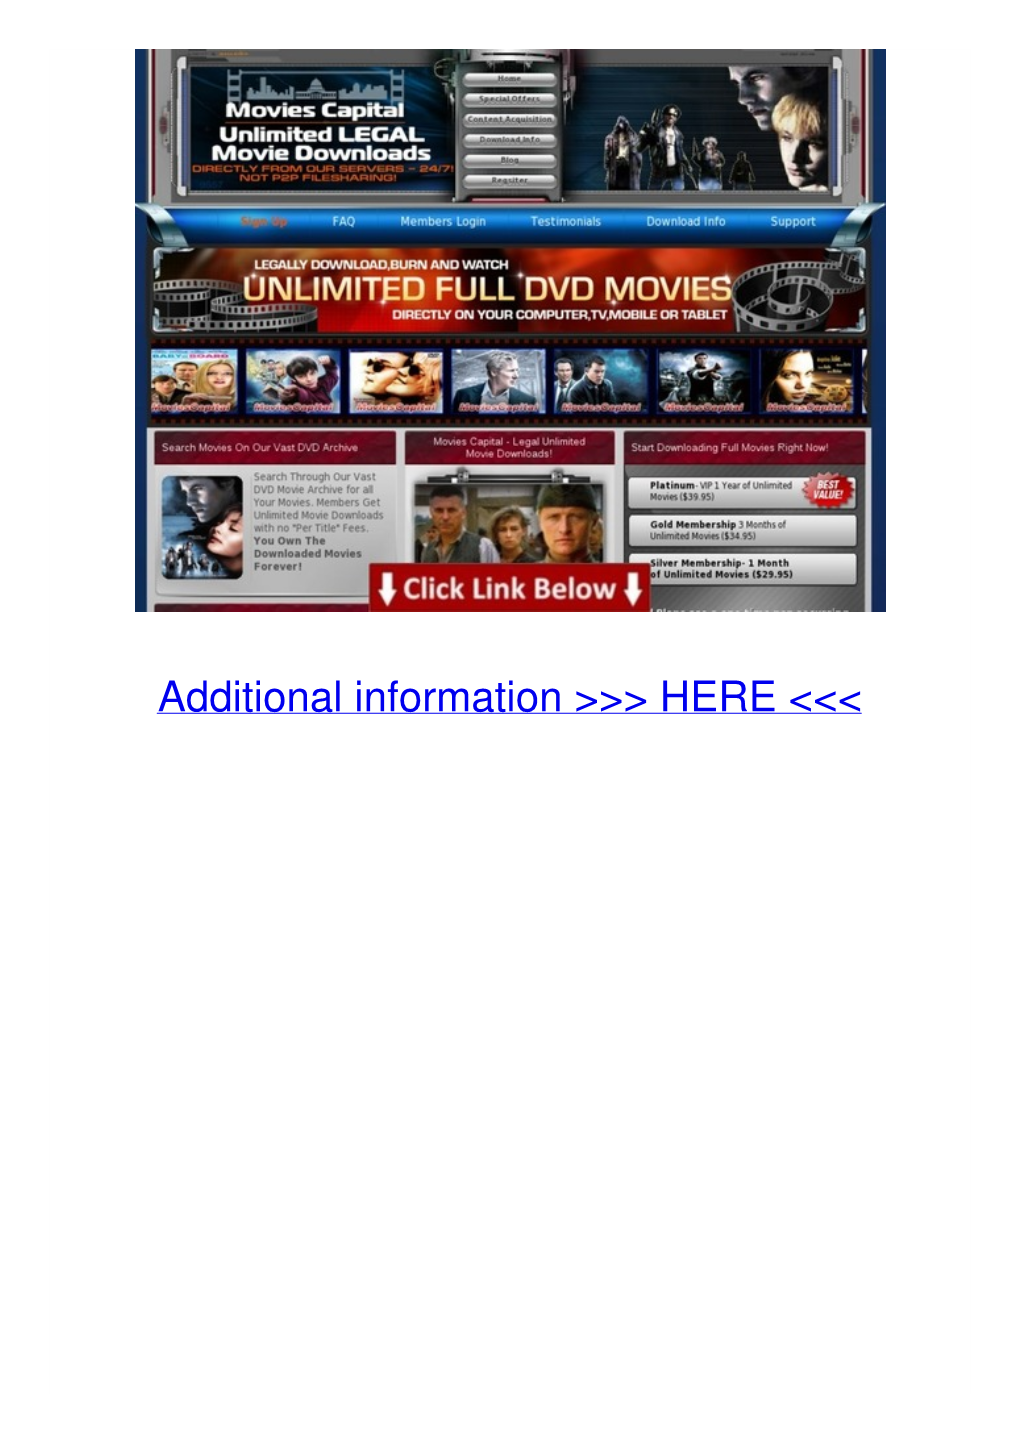 Download Online Movies